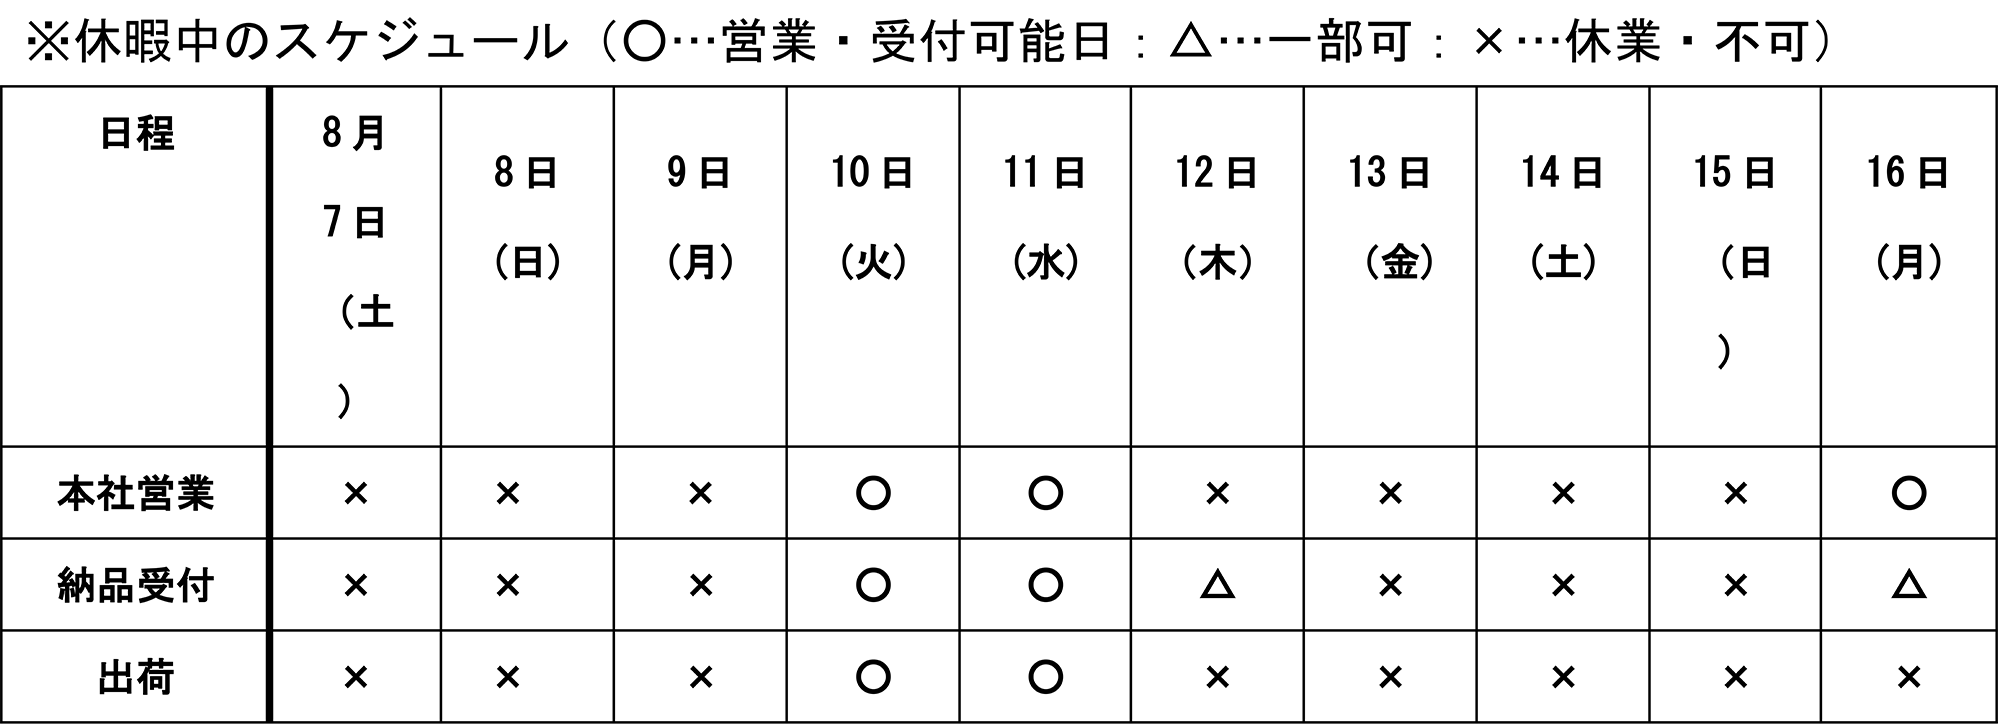 2021_Obon_Yasumi_Schedule